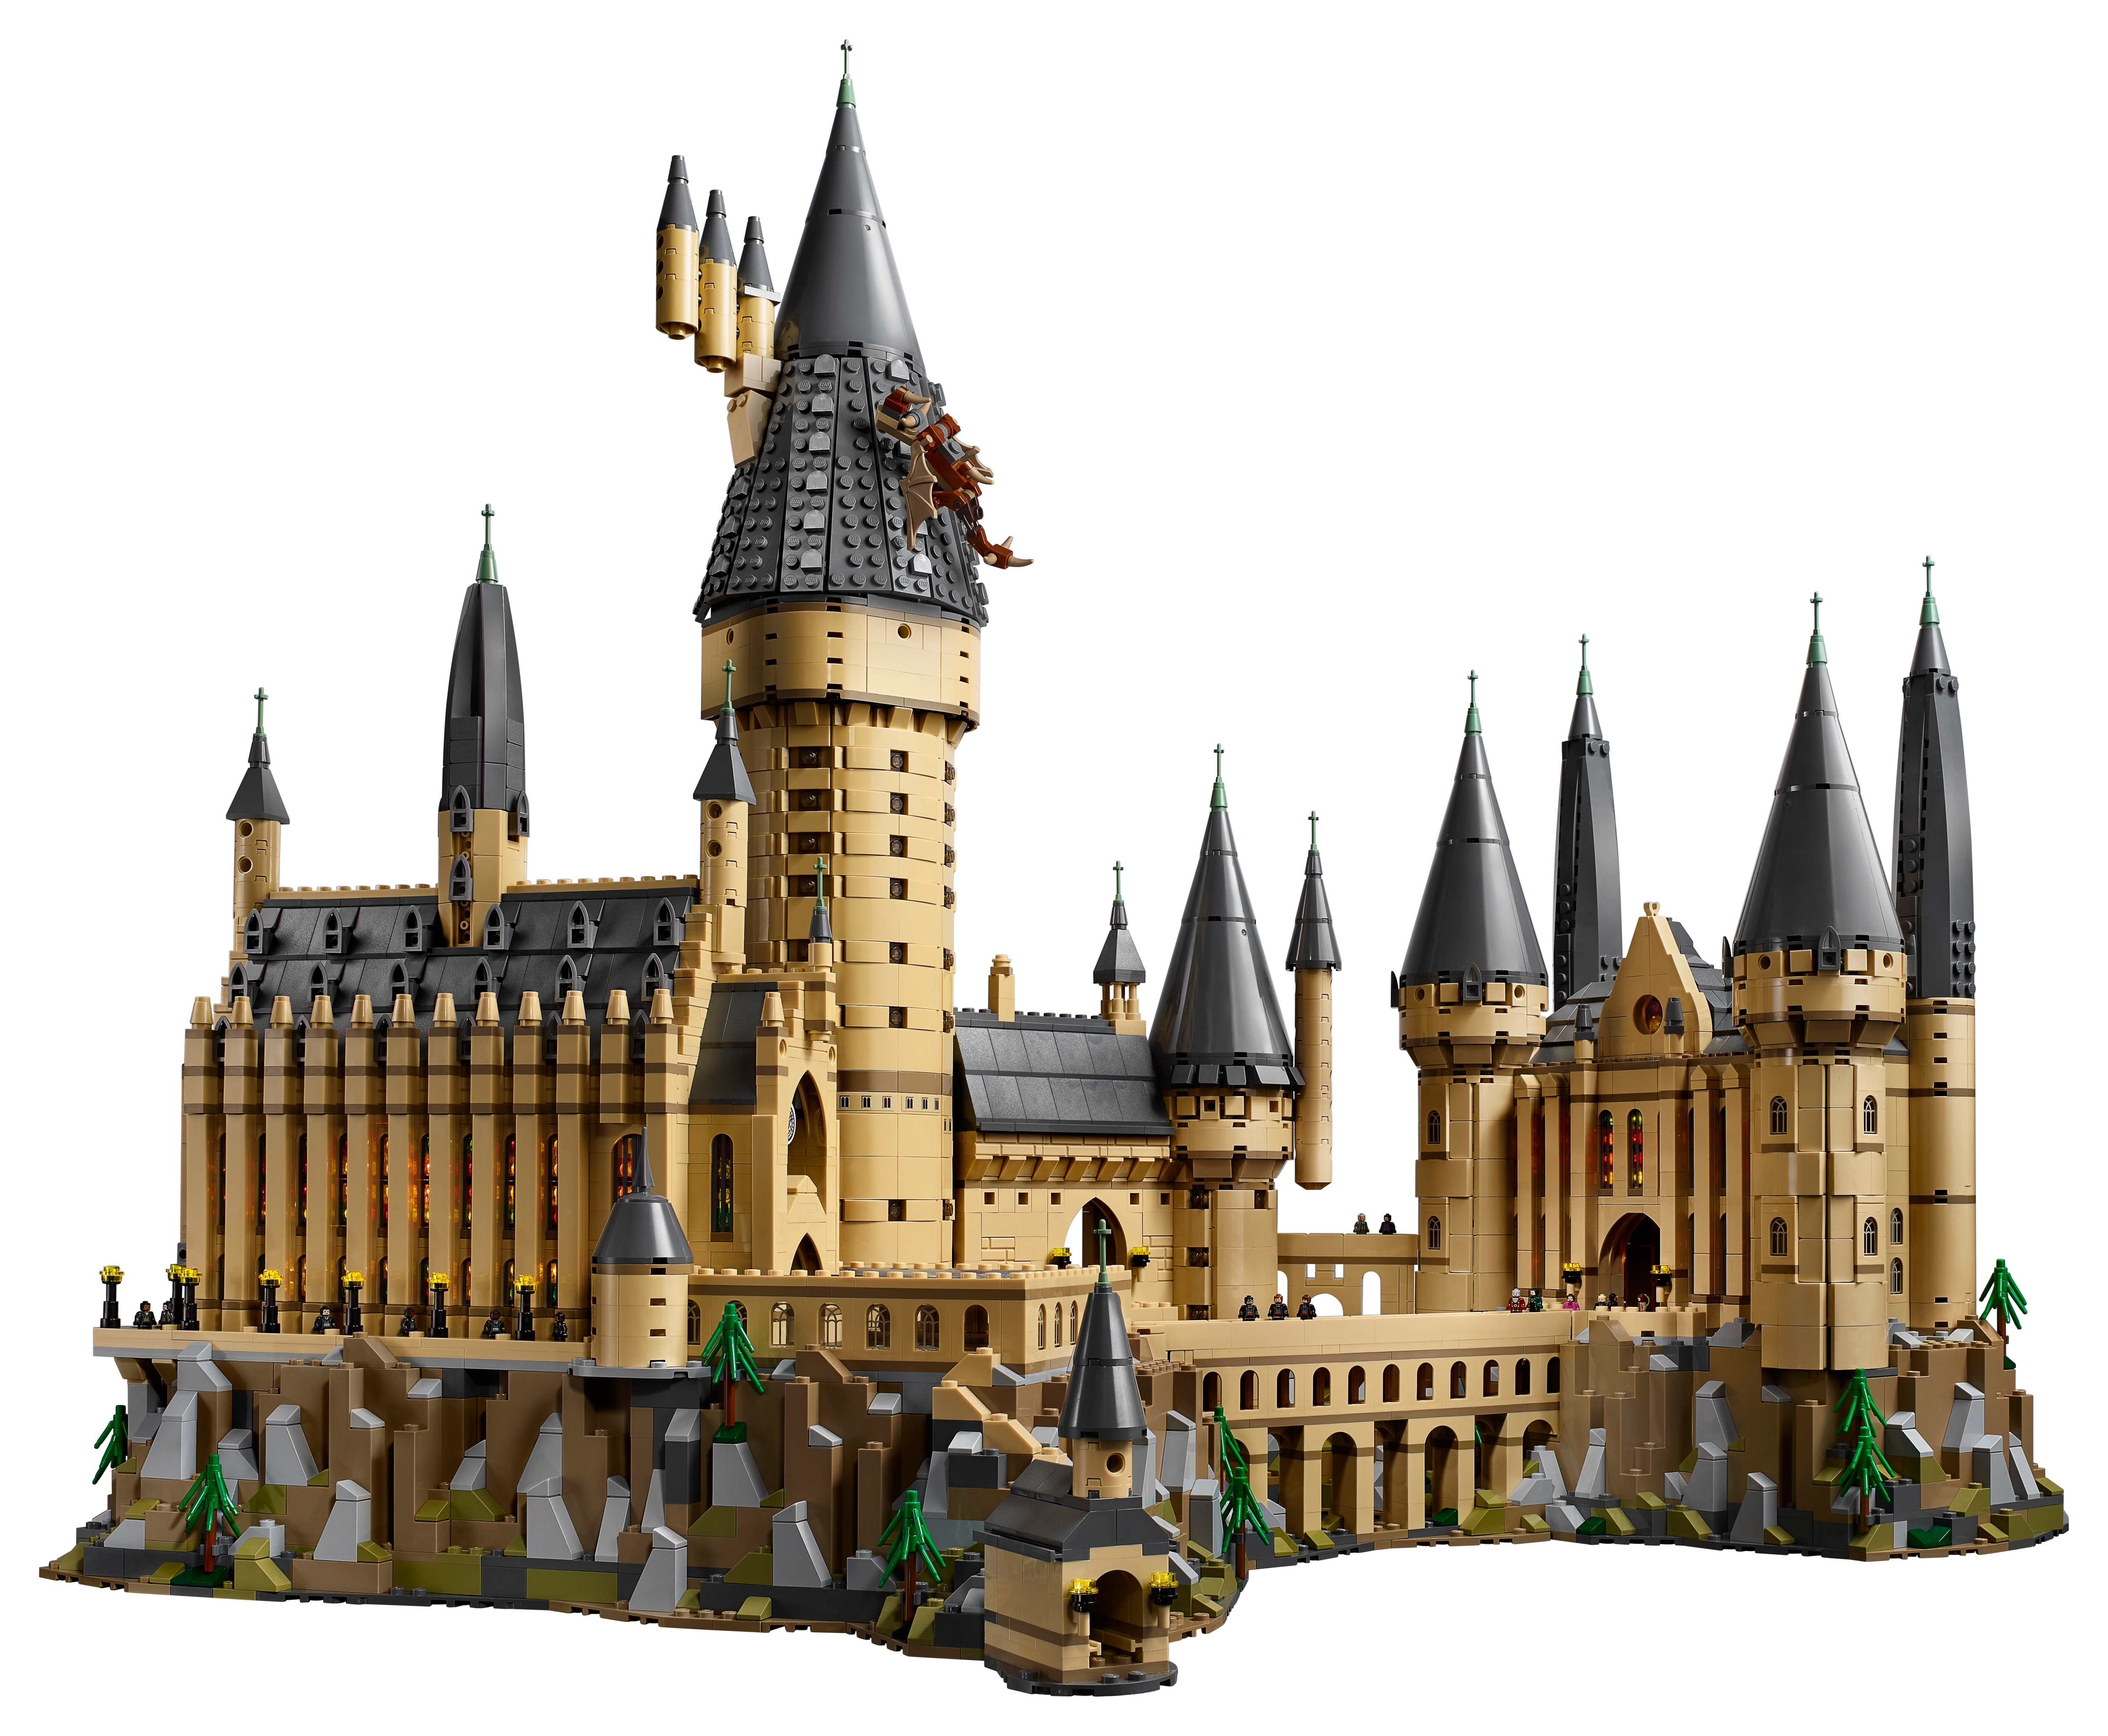 6020 Pieces Brand New LEGO Harry Potter Hogwarts Castle 71043 Building Kit